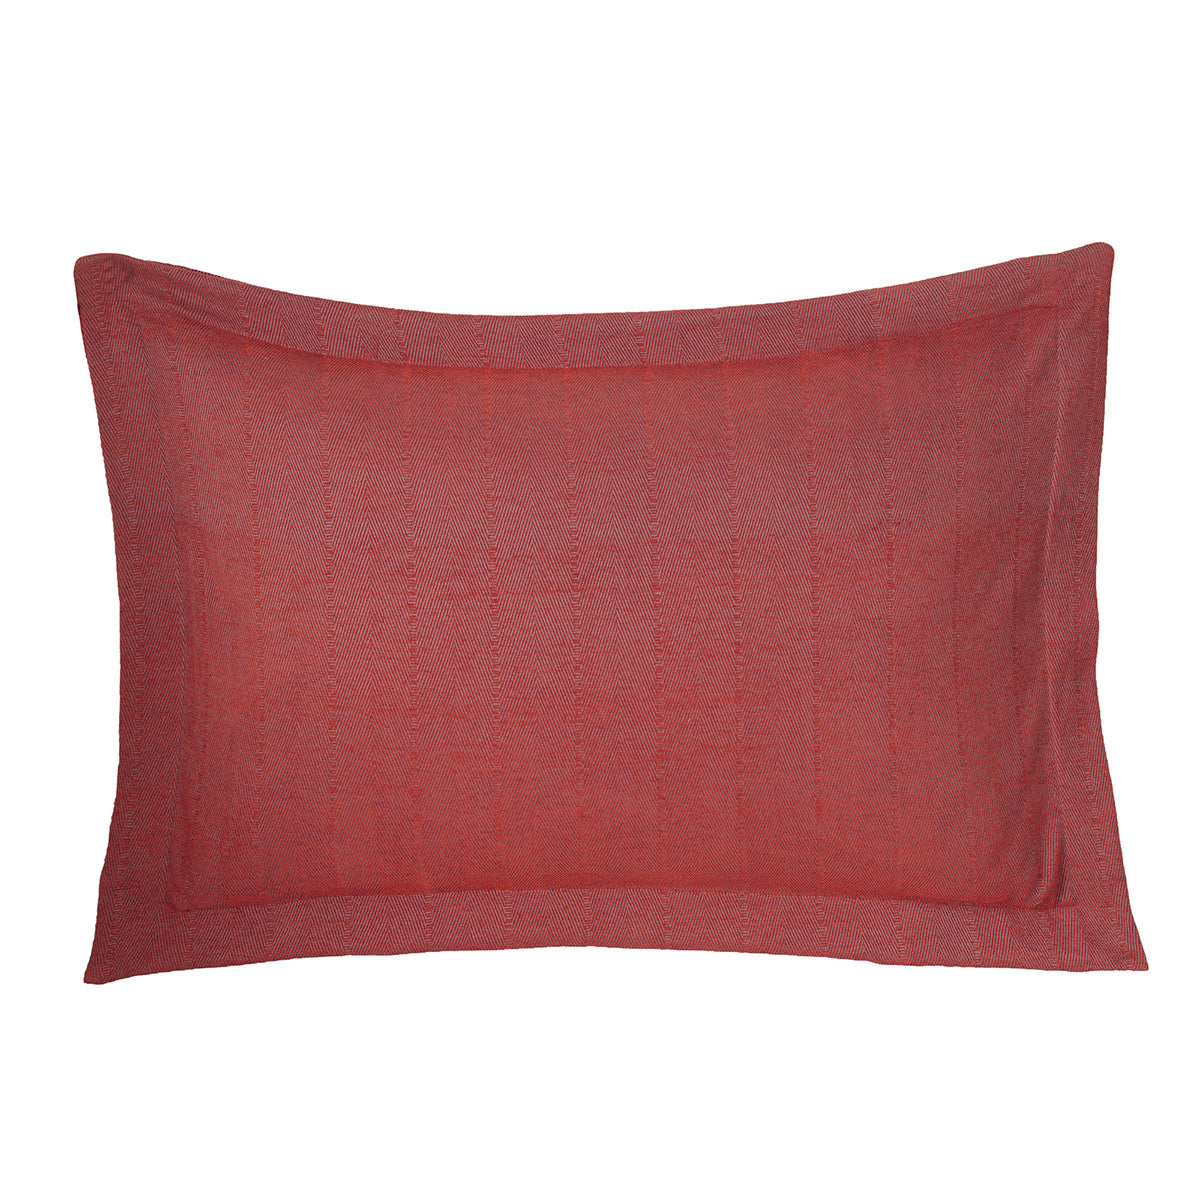 Nouveau Tradition Zigwine Red Pillow Sham Set